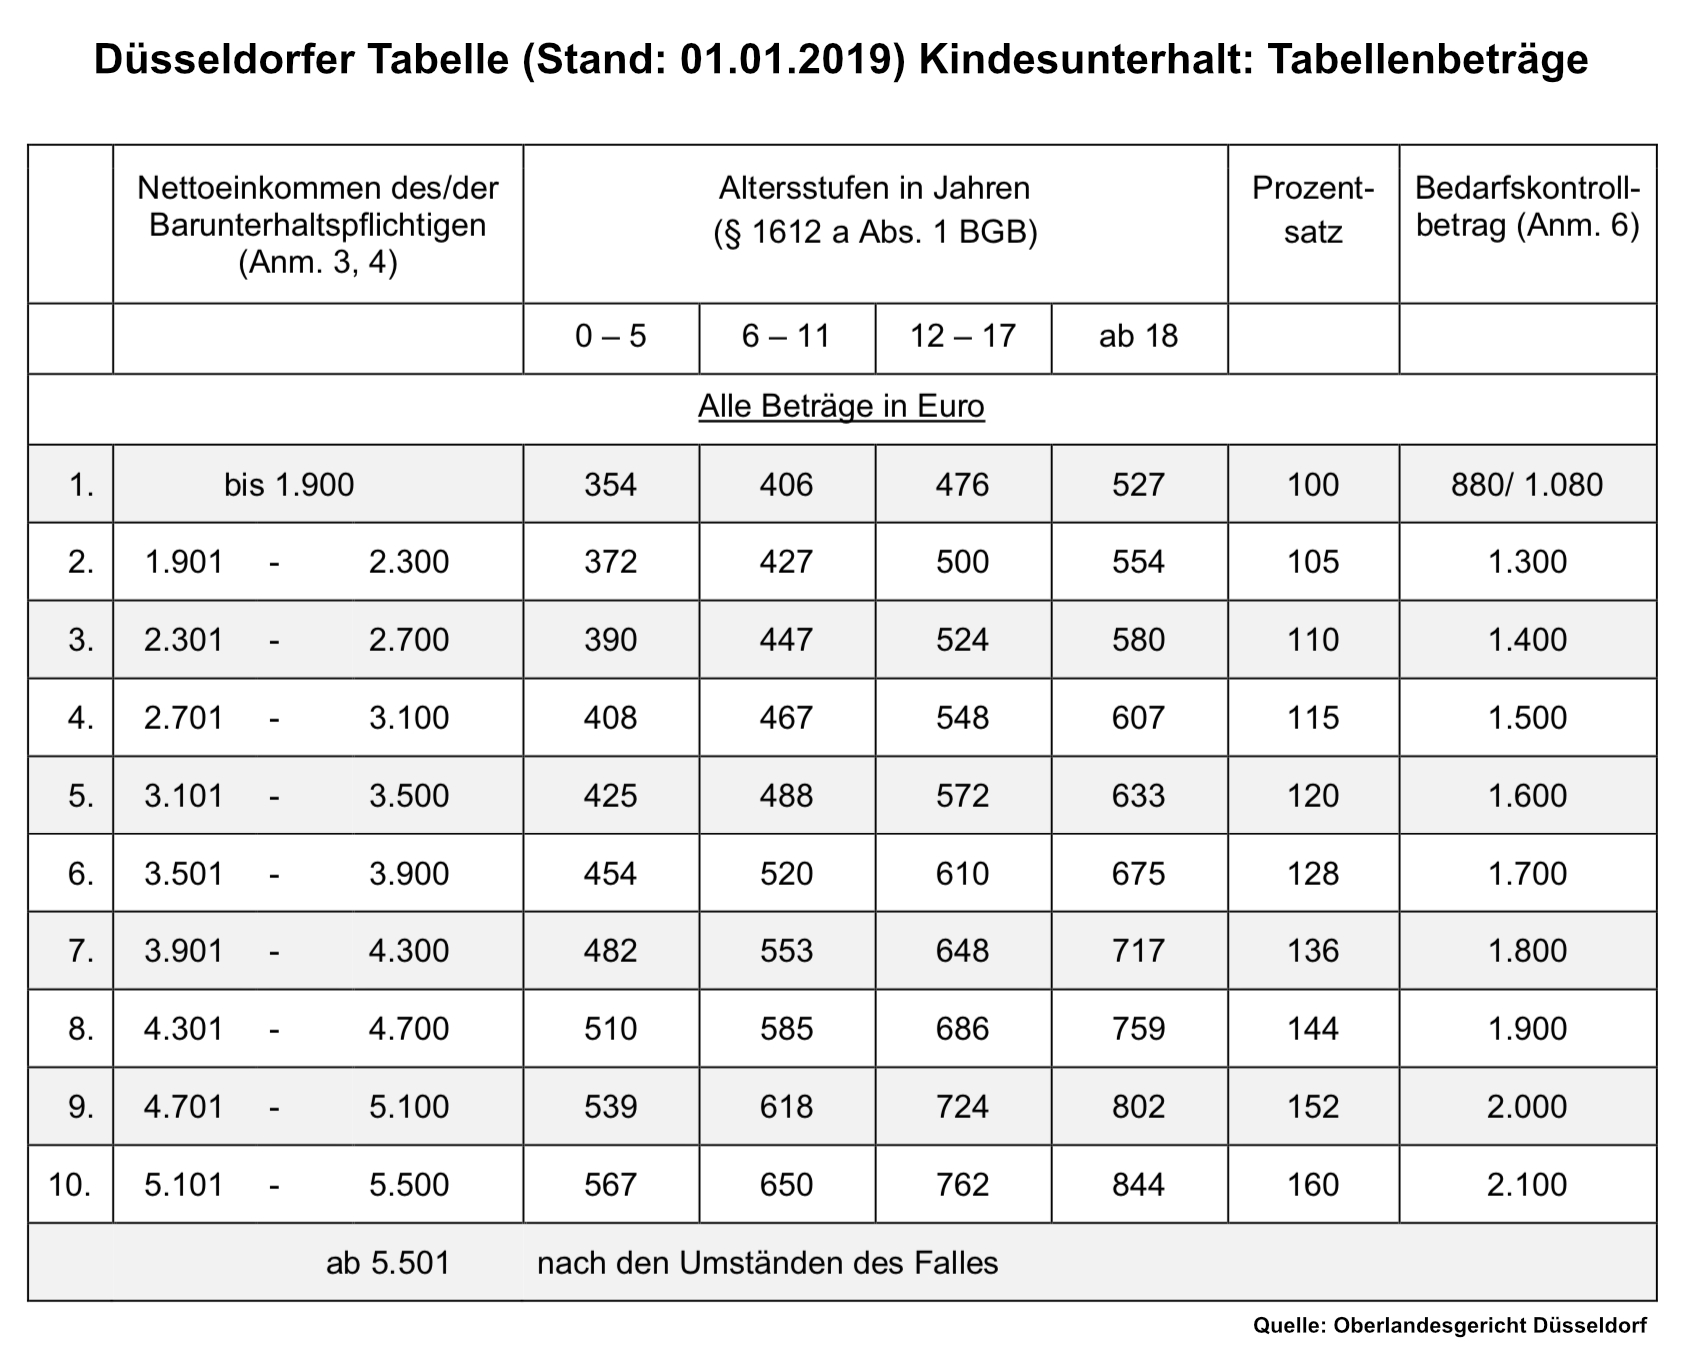 Düsseldorfer Tabelle 2019